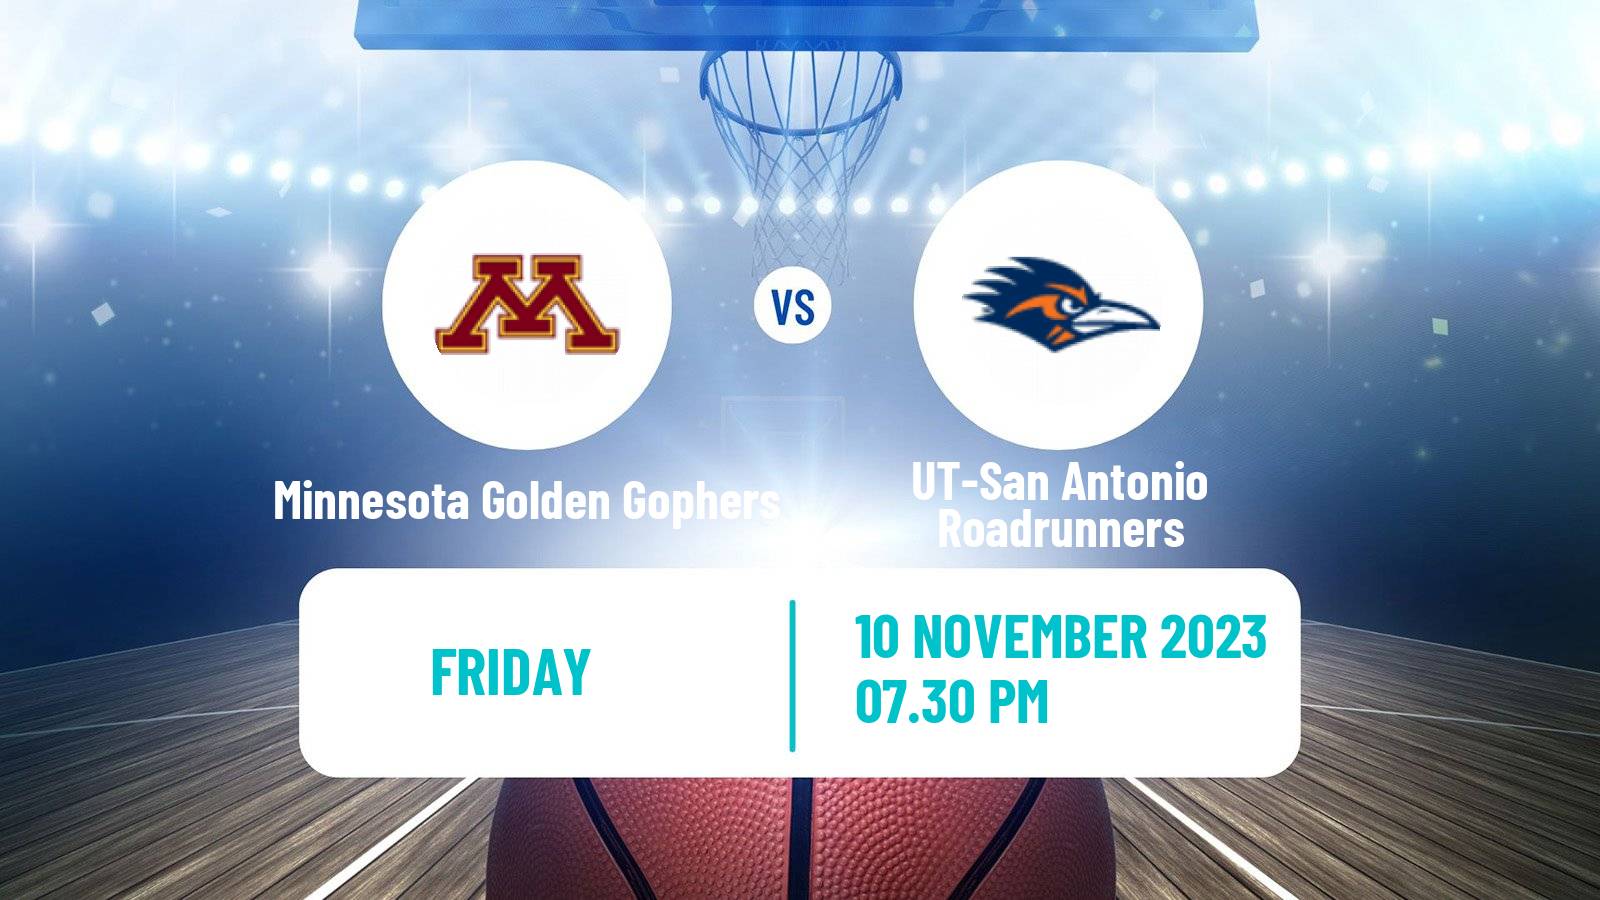 Basketball NCAA College Basketball Minnesota Golden Gophers - UT-San Antonio Roadrunners